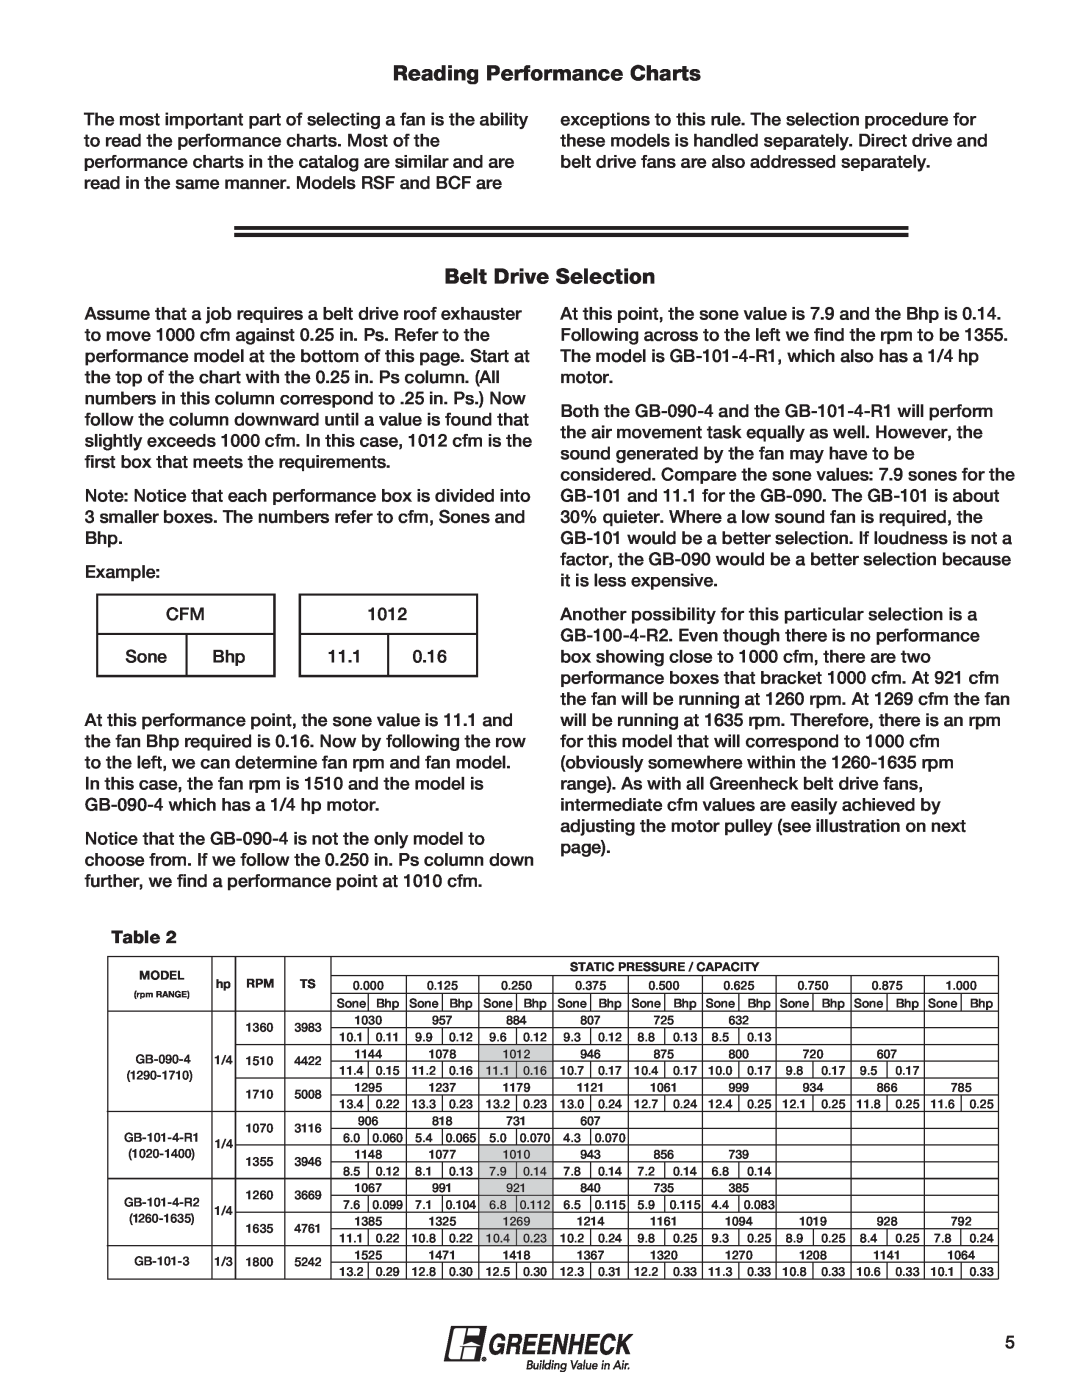 Greenheck Fan 240XP-CUb manual Reading Performance Charts, Belt Drive Selection 